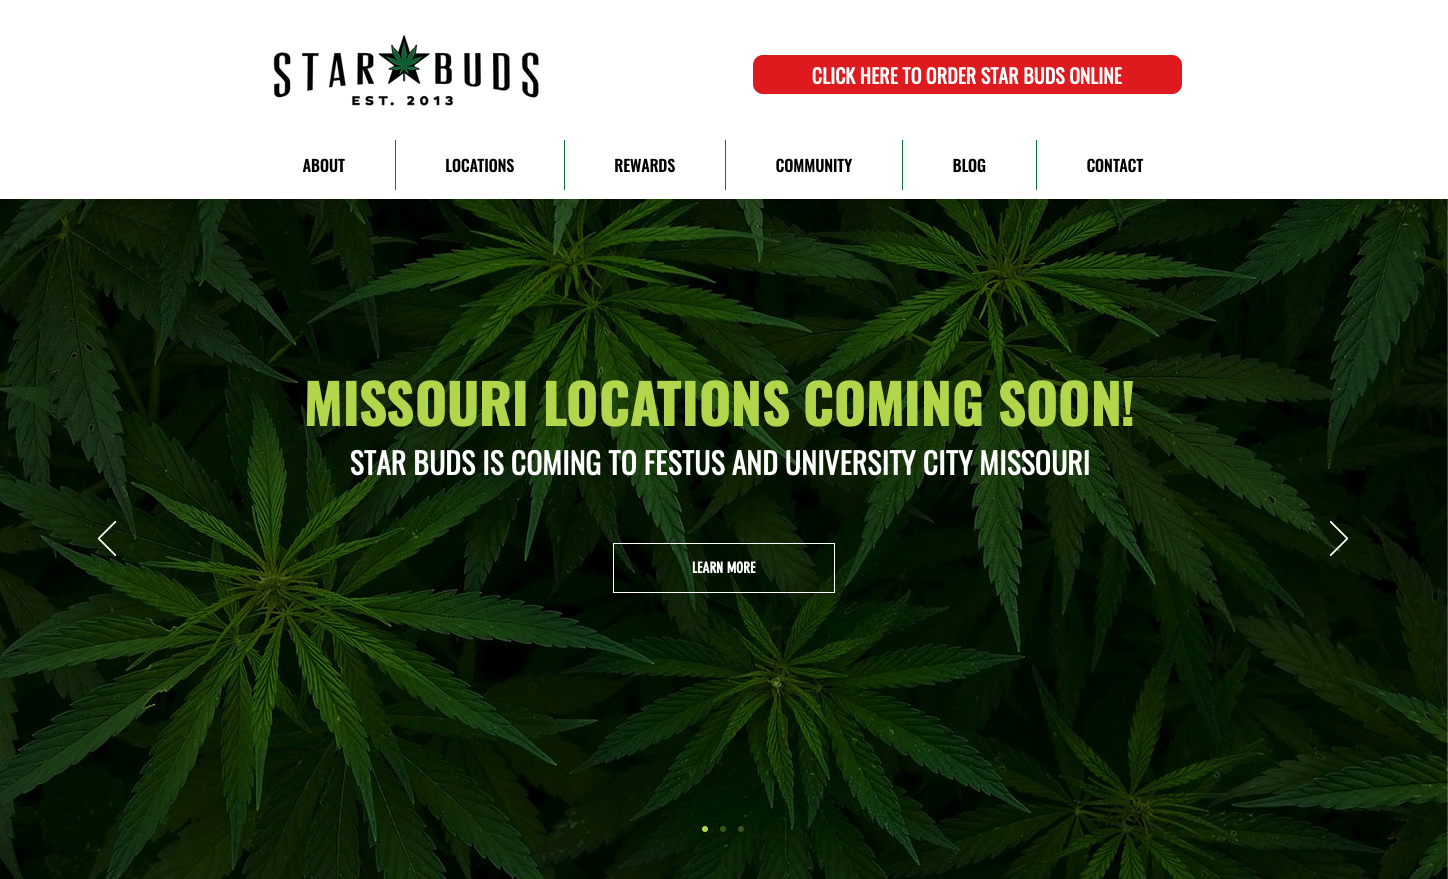 Star Buds in Colorado has a modern, clean website design.